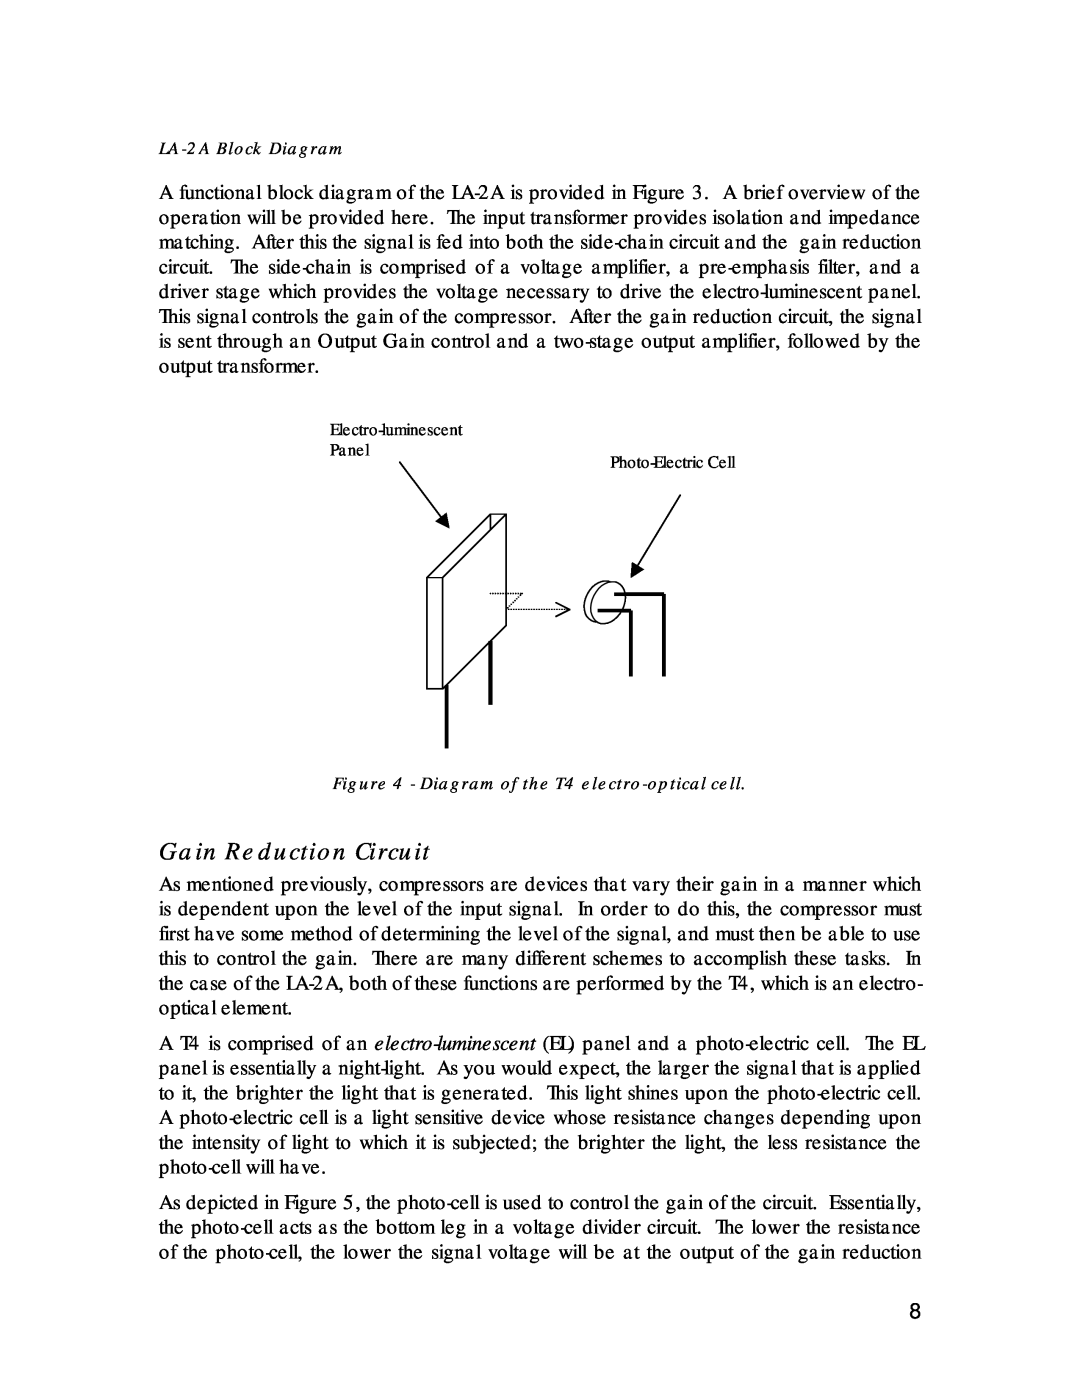 Inova manual Gain Reduction Circuit, LA-2ABlock Diagram, Diagram of the T4 electro-opticalcell 